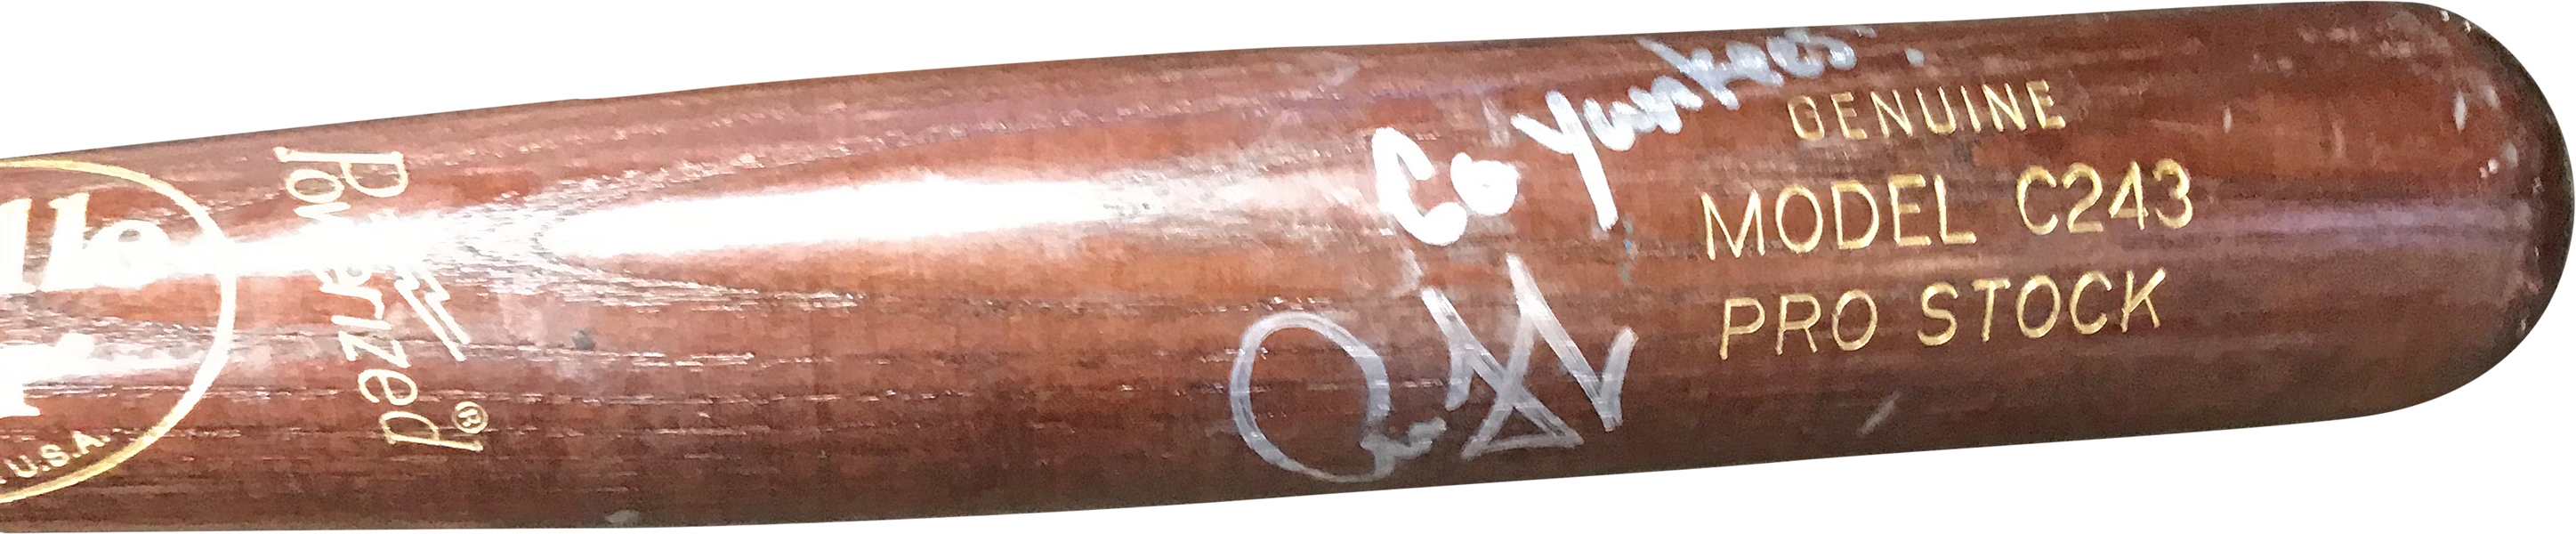 Aaron Judge Pre-Rookie Signed Model C243 Used Baseball Bat w/ "Go Yankees" Inscription! (Beckett/BAS)